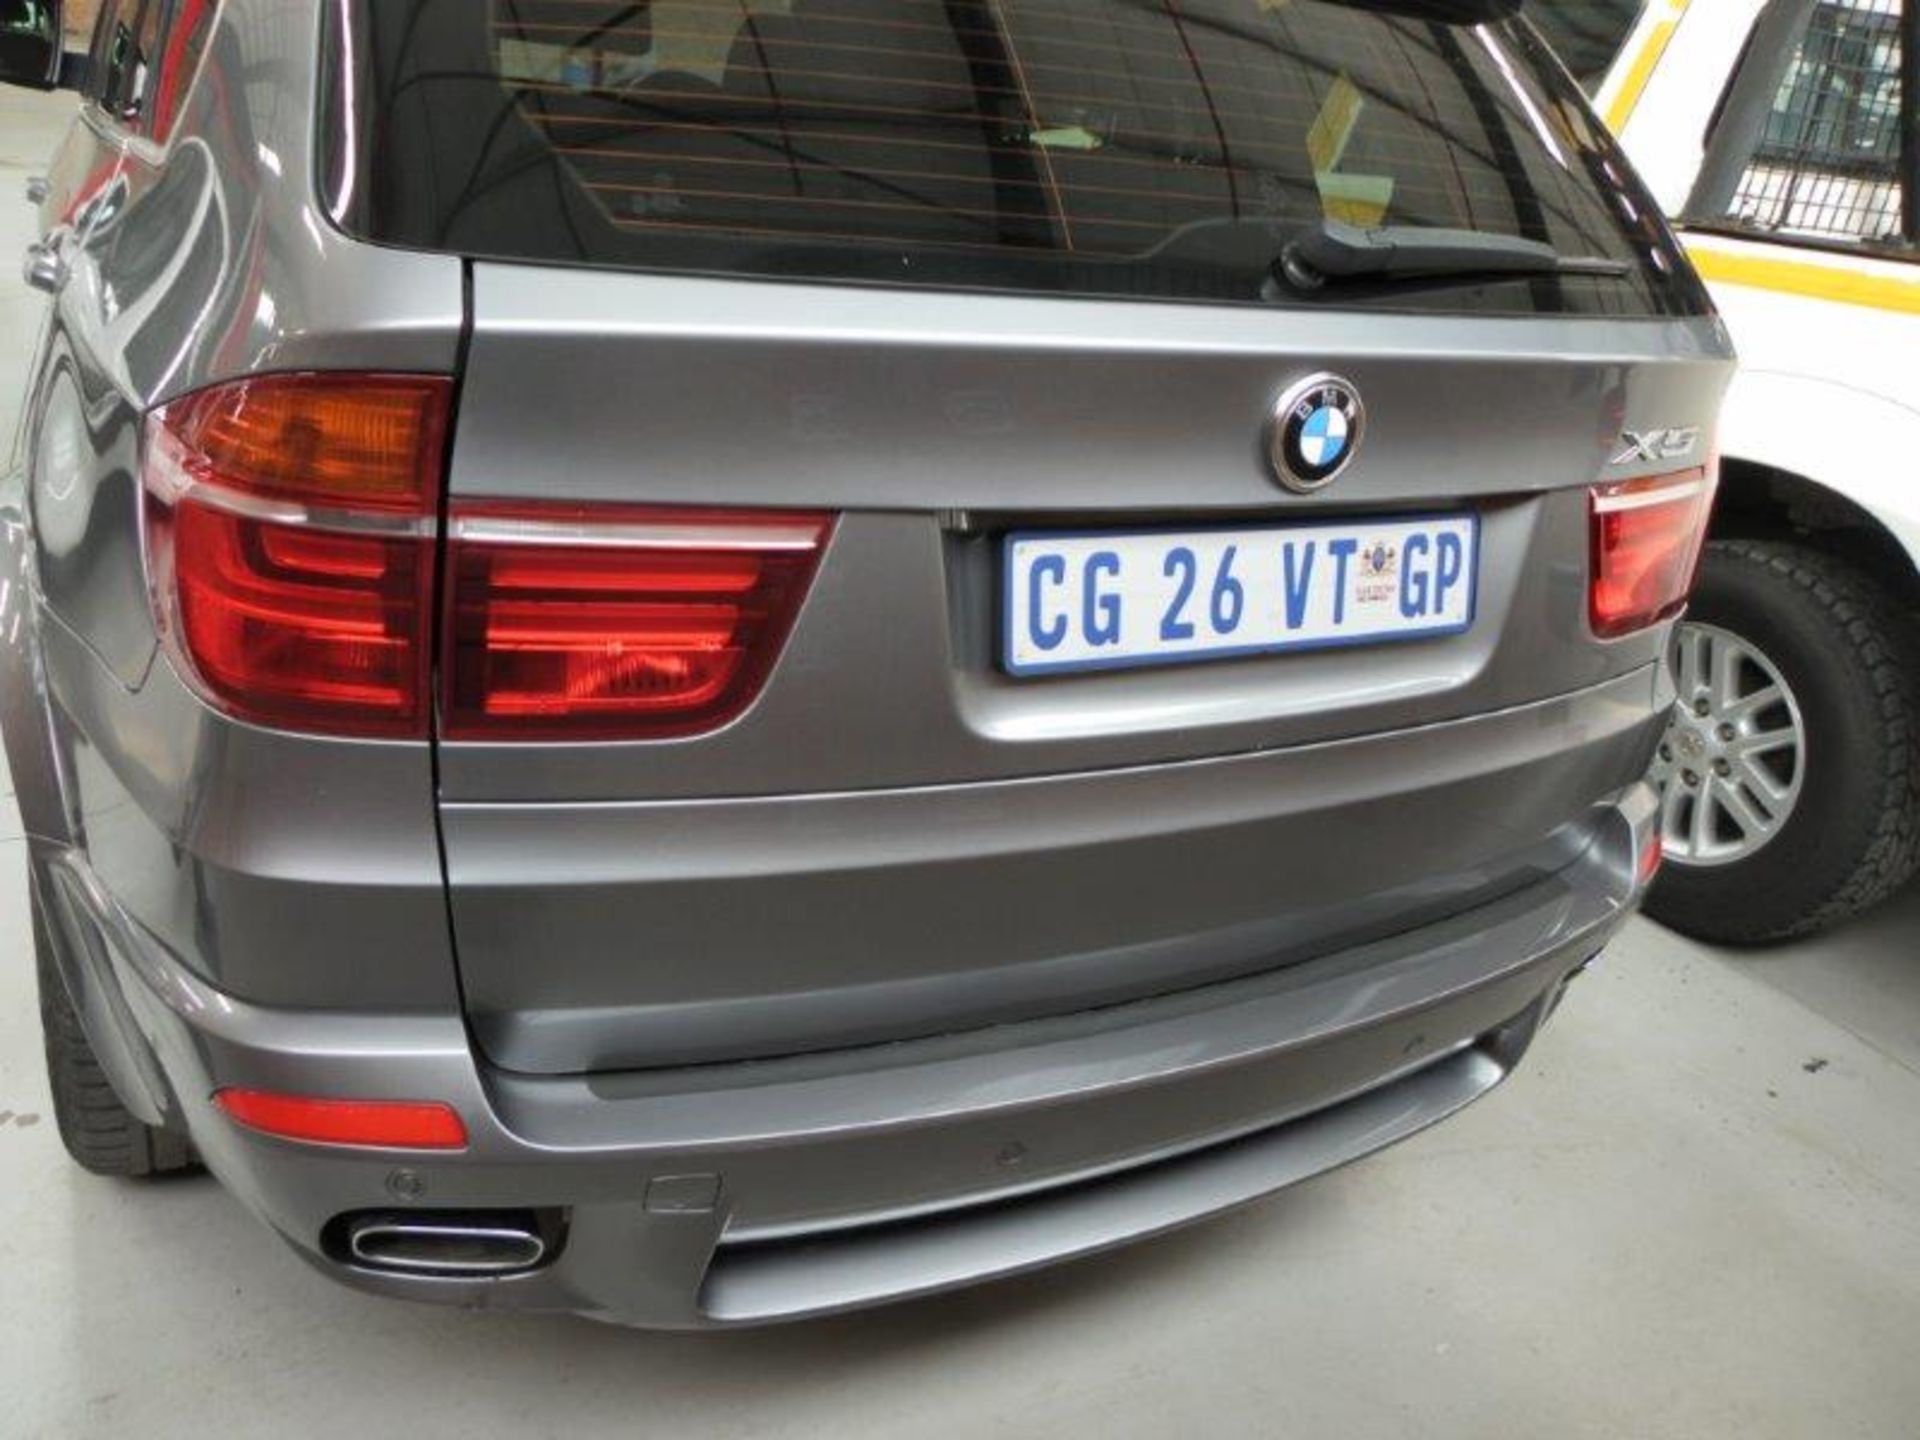 2013 CG26VTGP BMW X5 X-Drive 4.0D Auto (Vin No: WBAZW62030L479886 )(PDC, Sunroof, Black Leather - Image 4 of 6